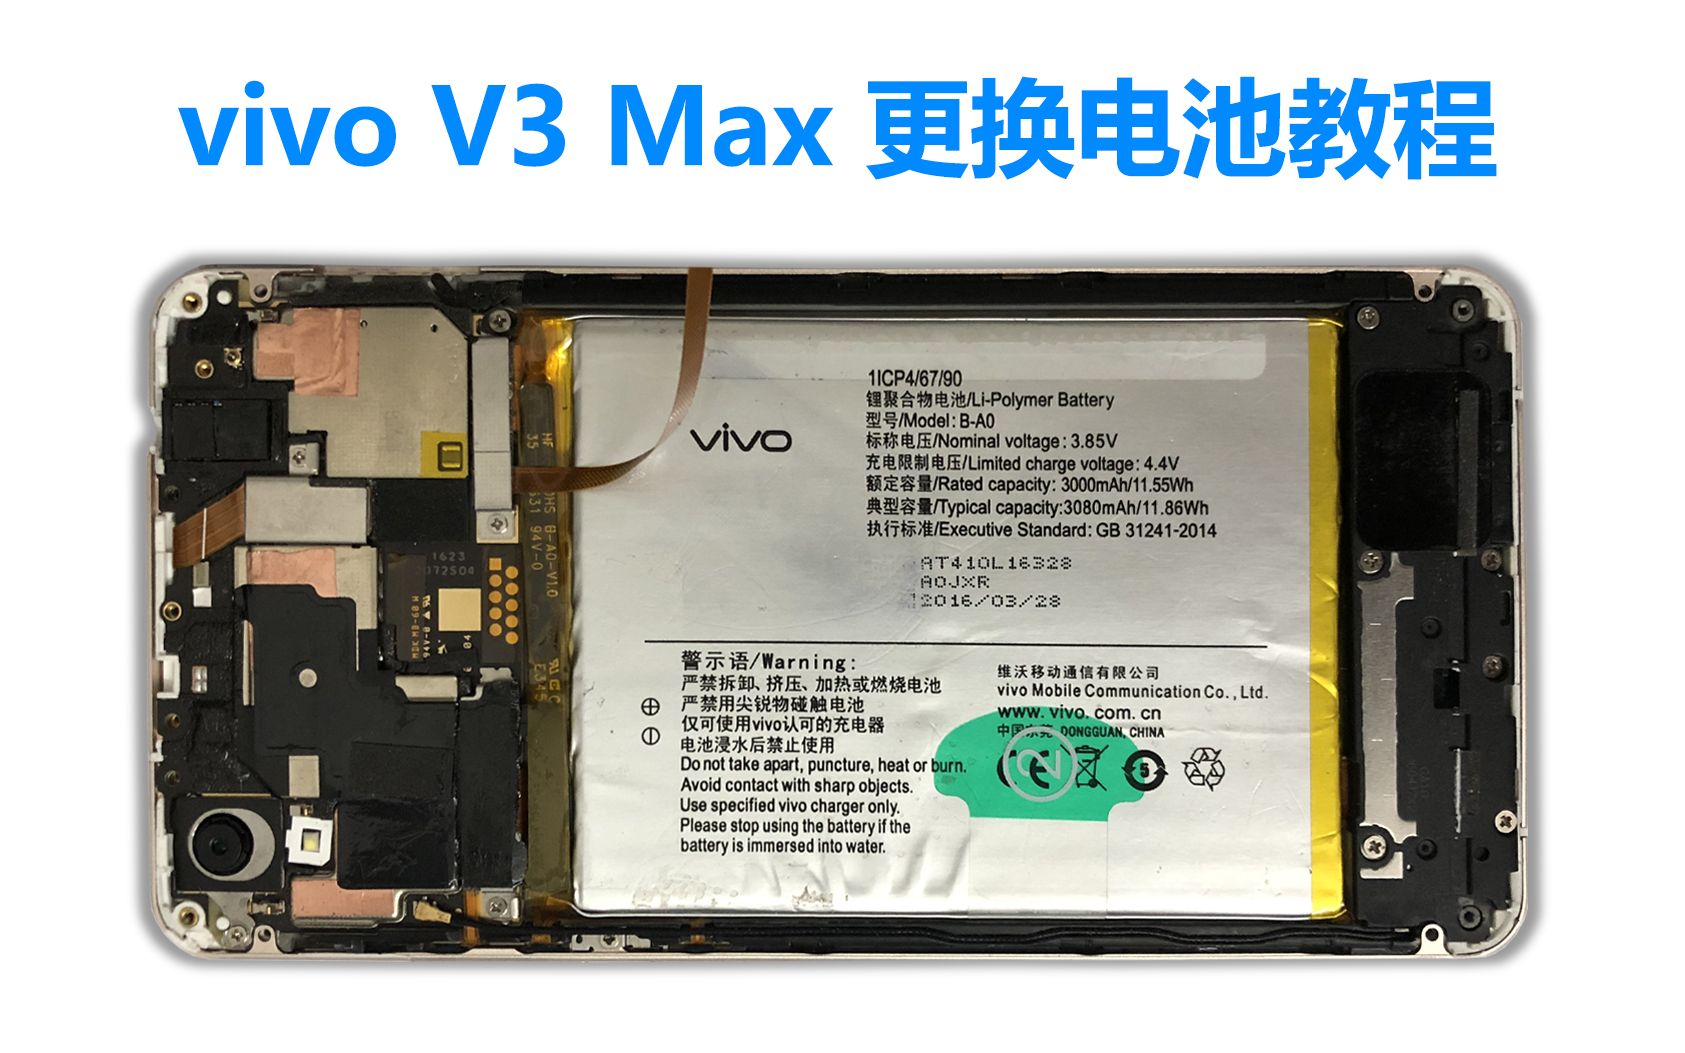 vivoz3maxvivoz3max拆机更换电池教程